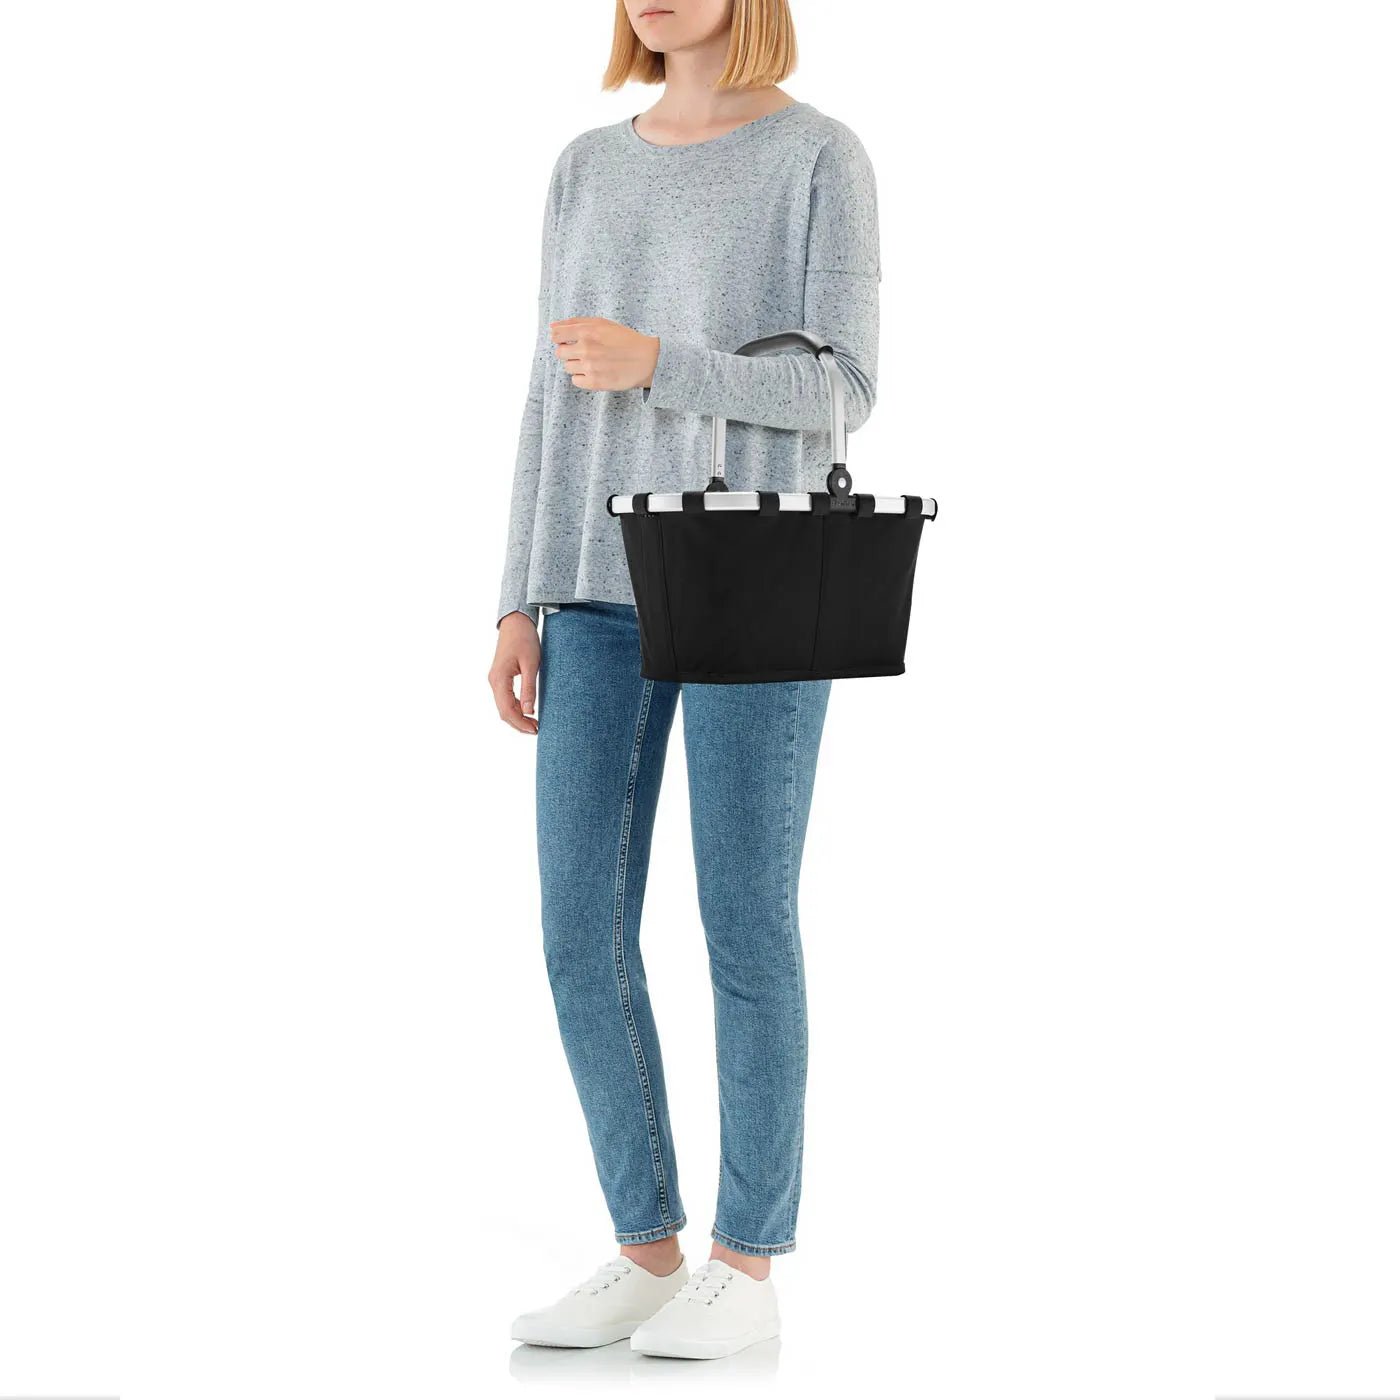 Reisenthel Shopping Carrybag XS Kinder-Einkaufskorb 33 cm - black